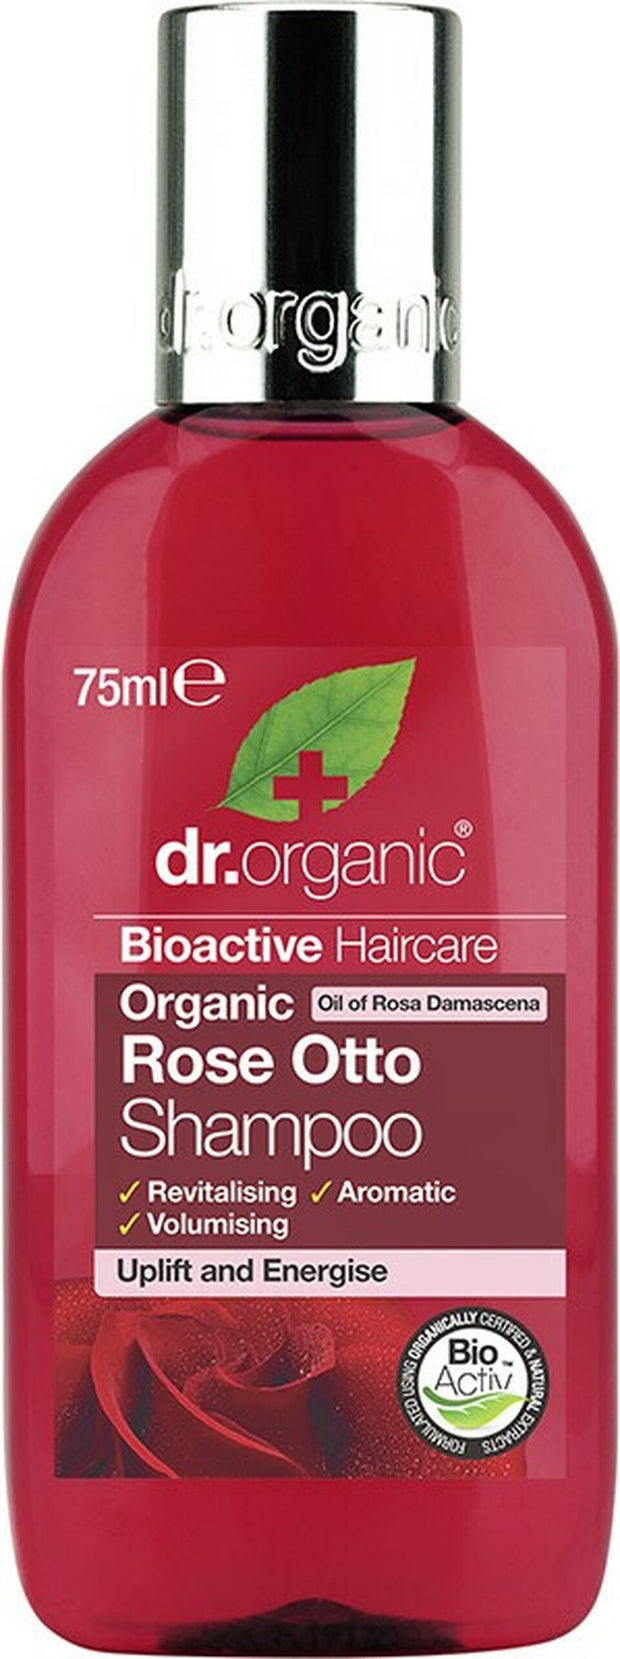 Rose Otto Shampoo (Mini) 75ml Dr Organic